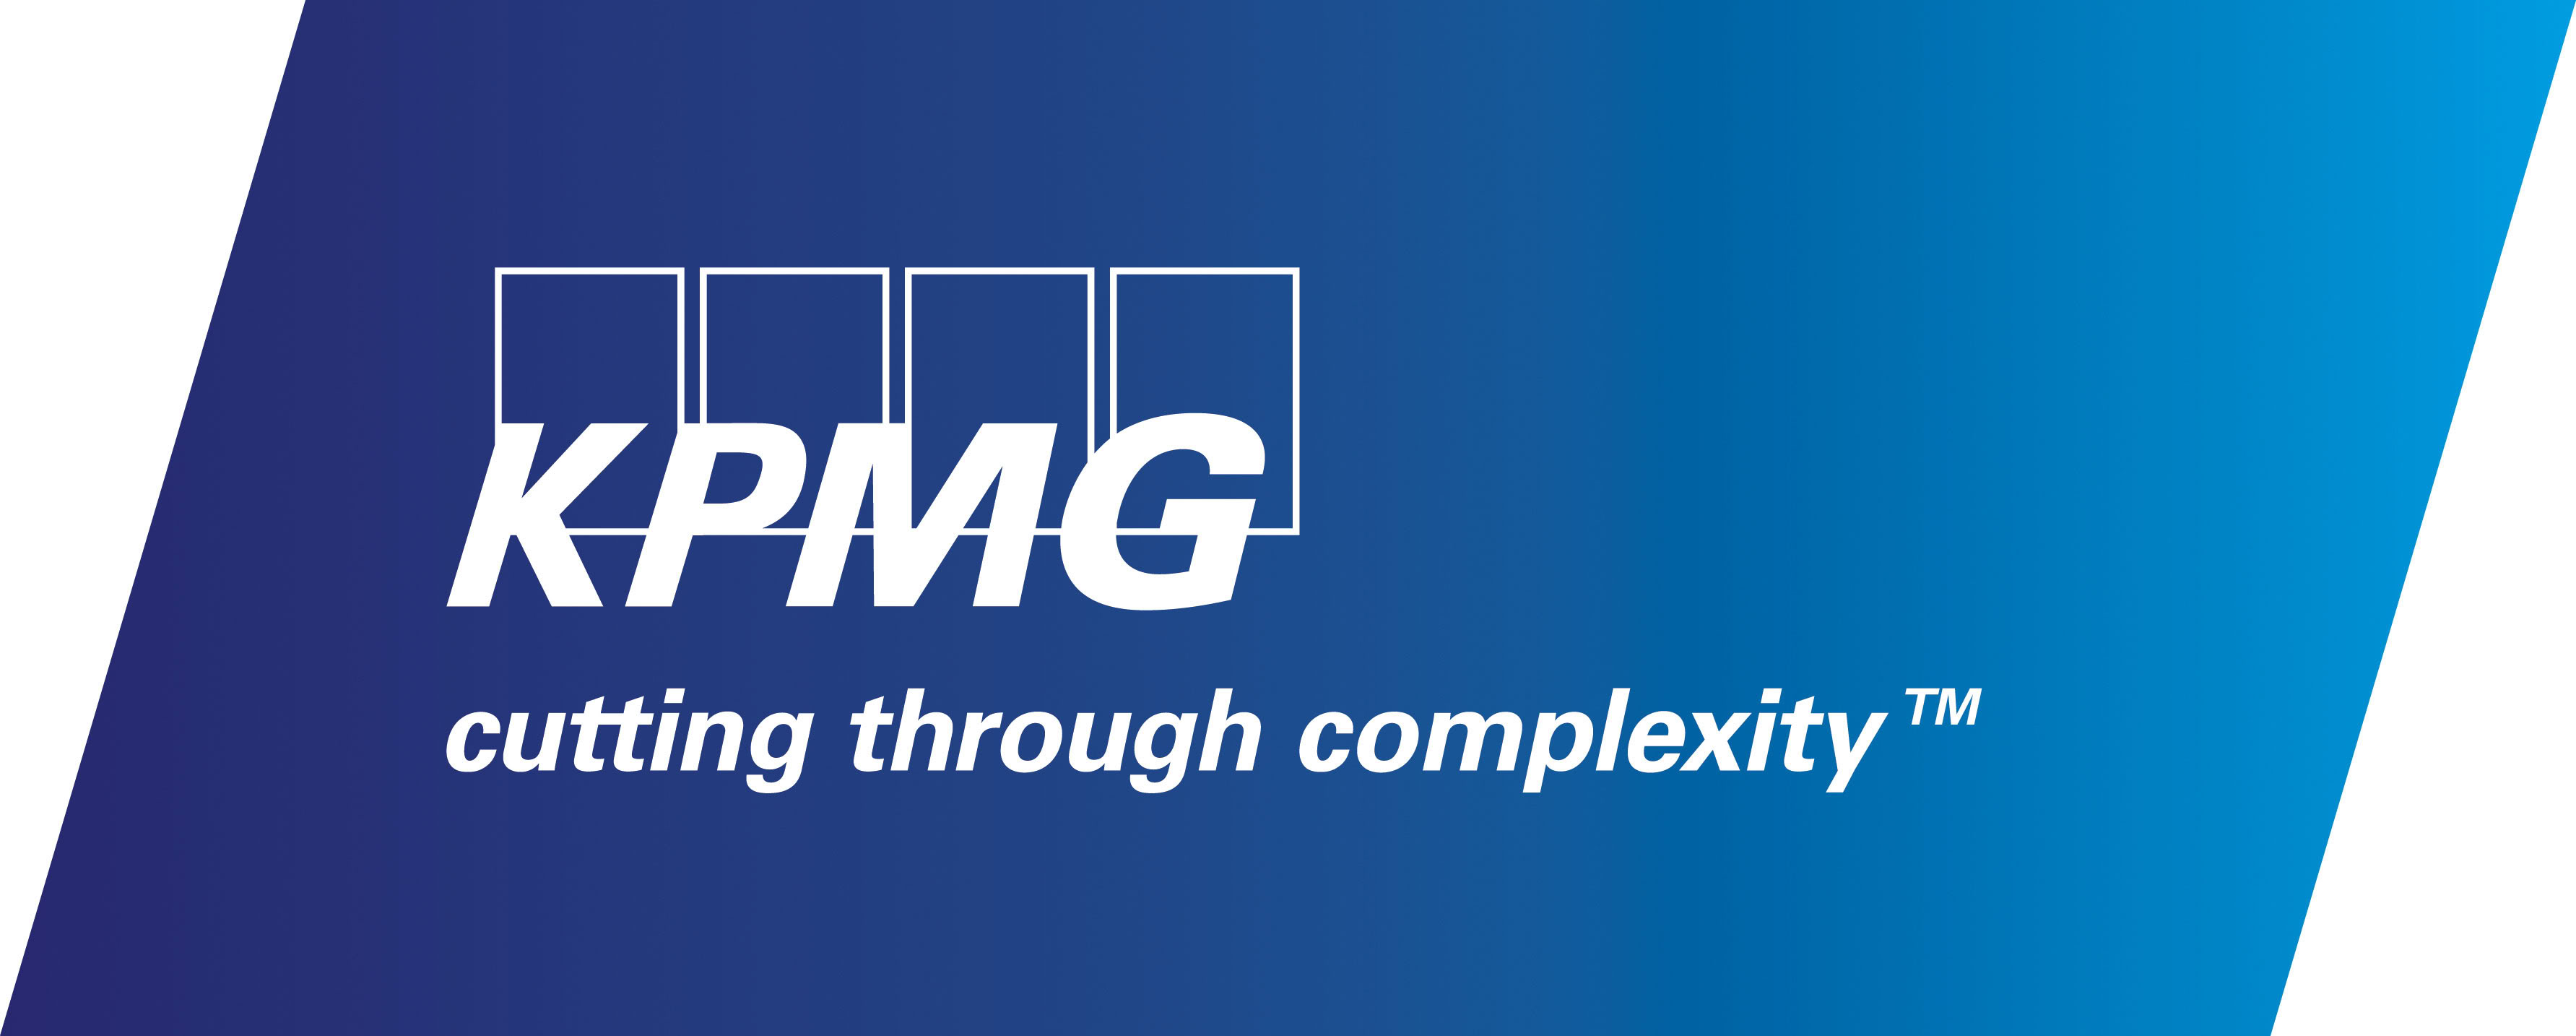 kpmg logo with aspect ratio calculator